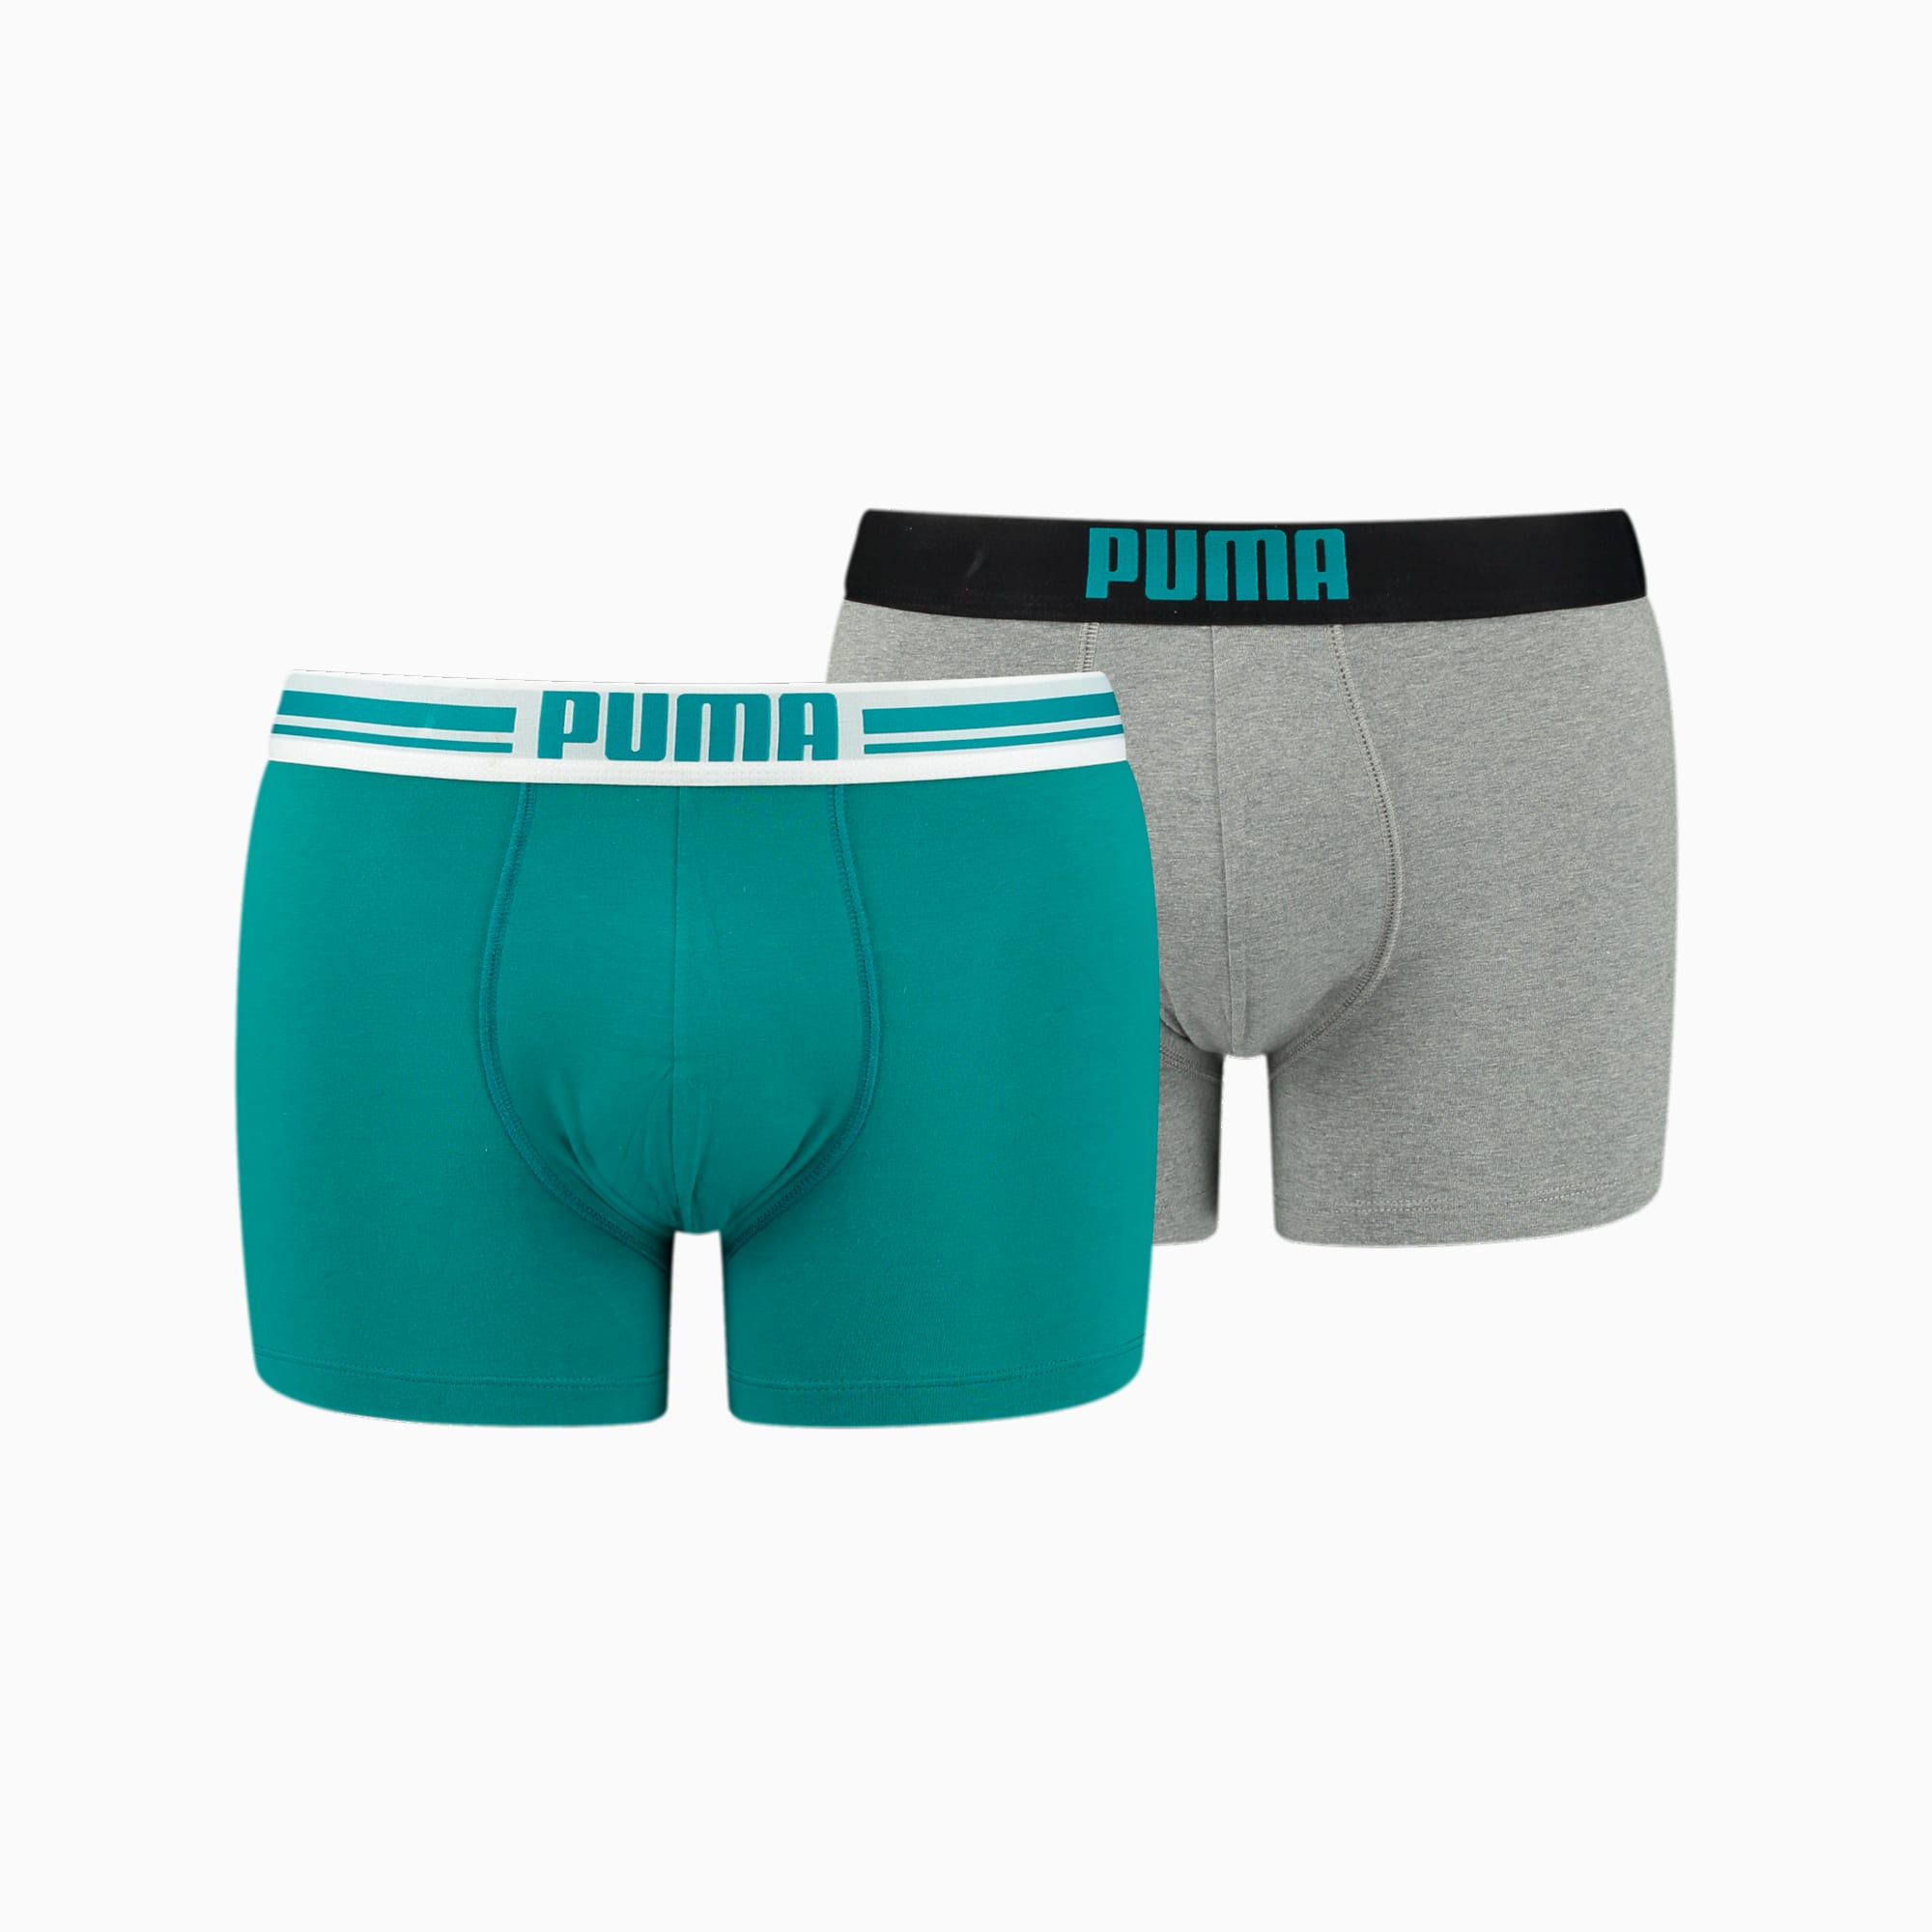 PUMA Placed Logo Herren-Boxershorts 2er-Pack, Grau, Größe: L, Kleidung